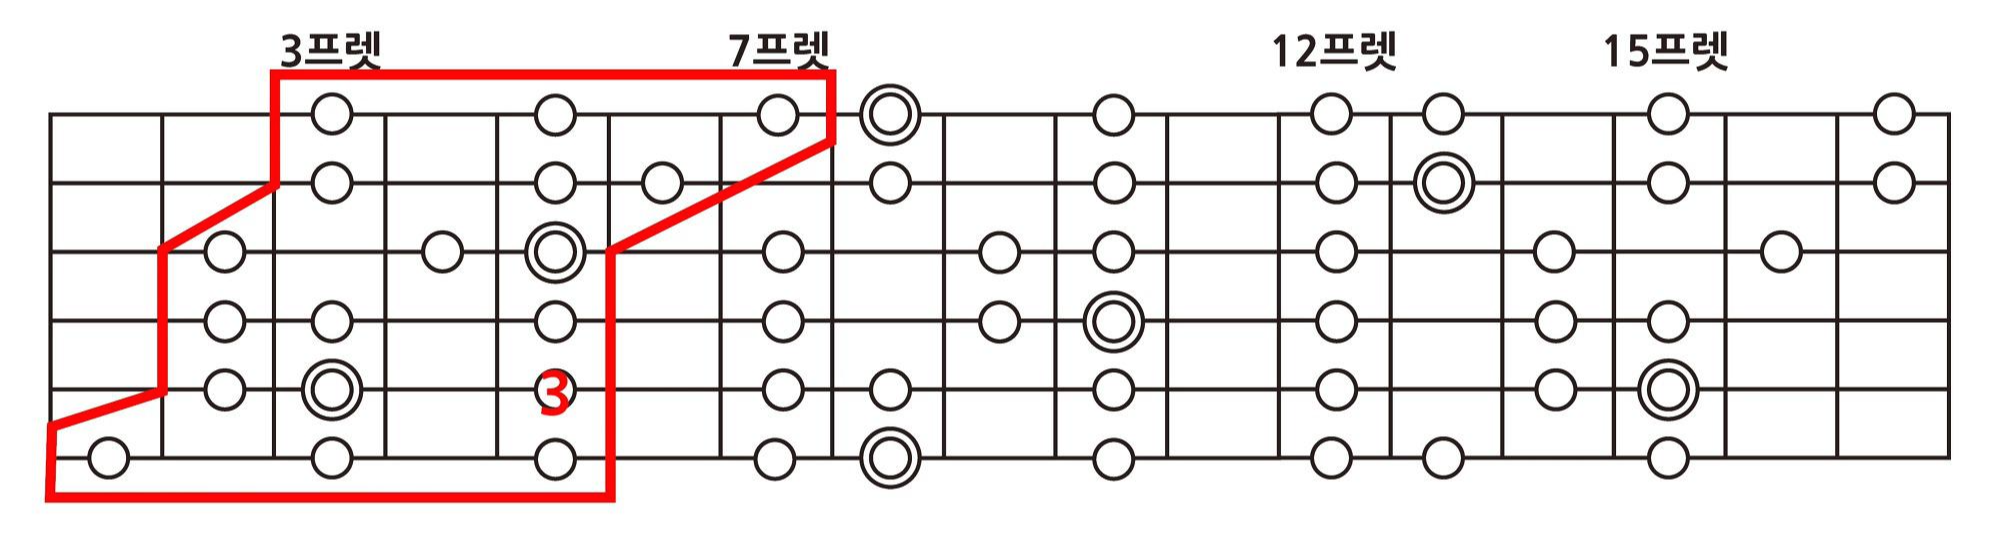 3-note-per-string-기타스케일-속주-해피엠기타